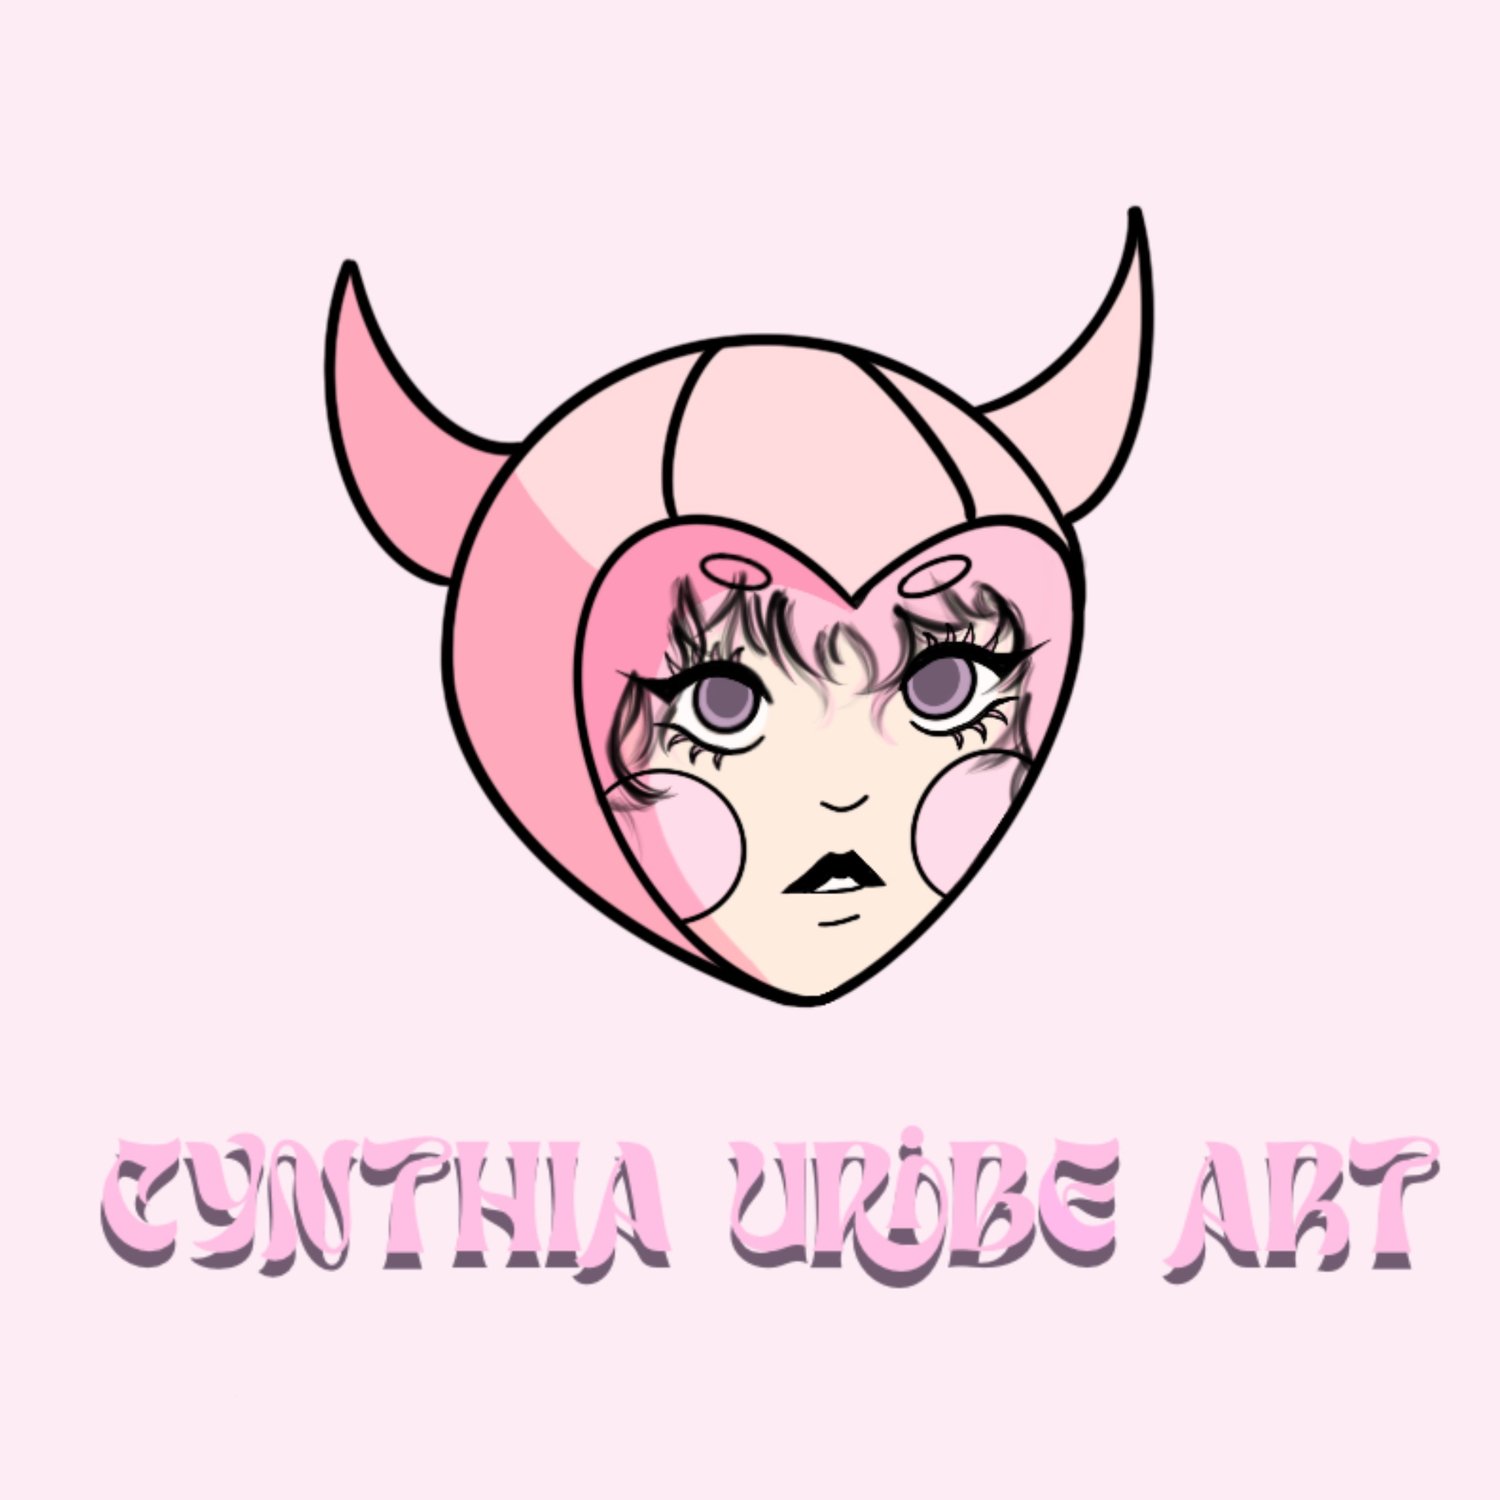 Cynthia Uribe Art